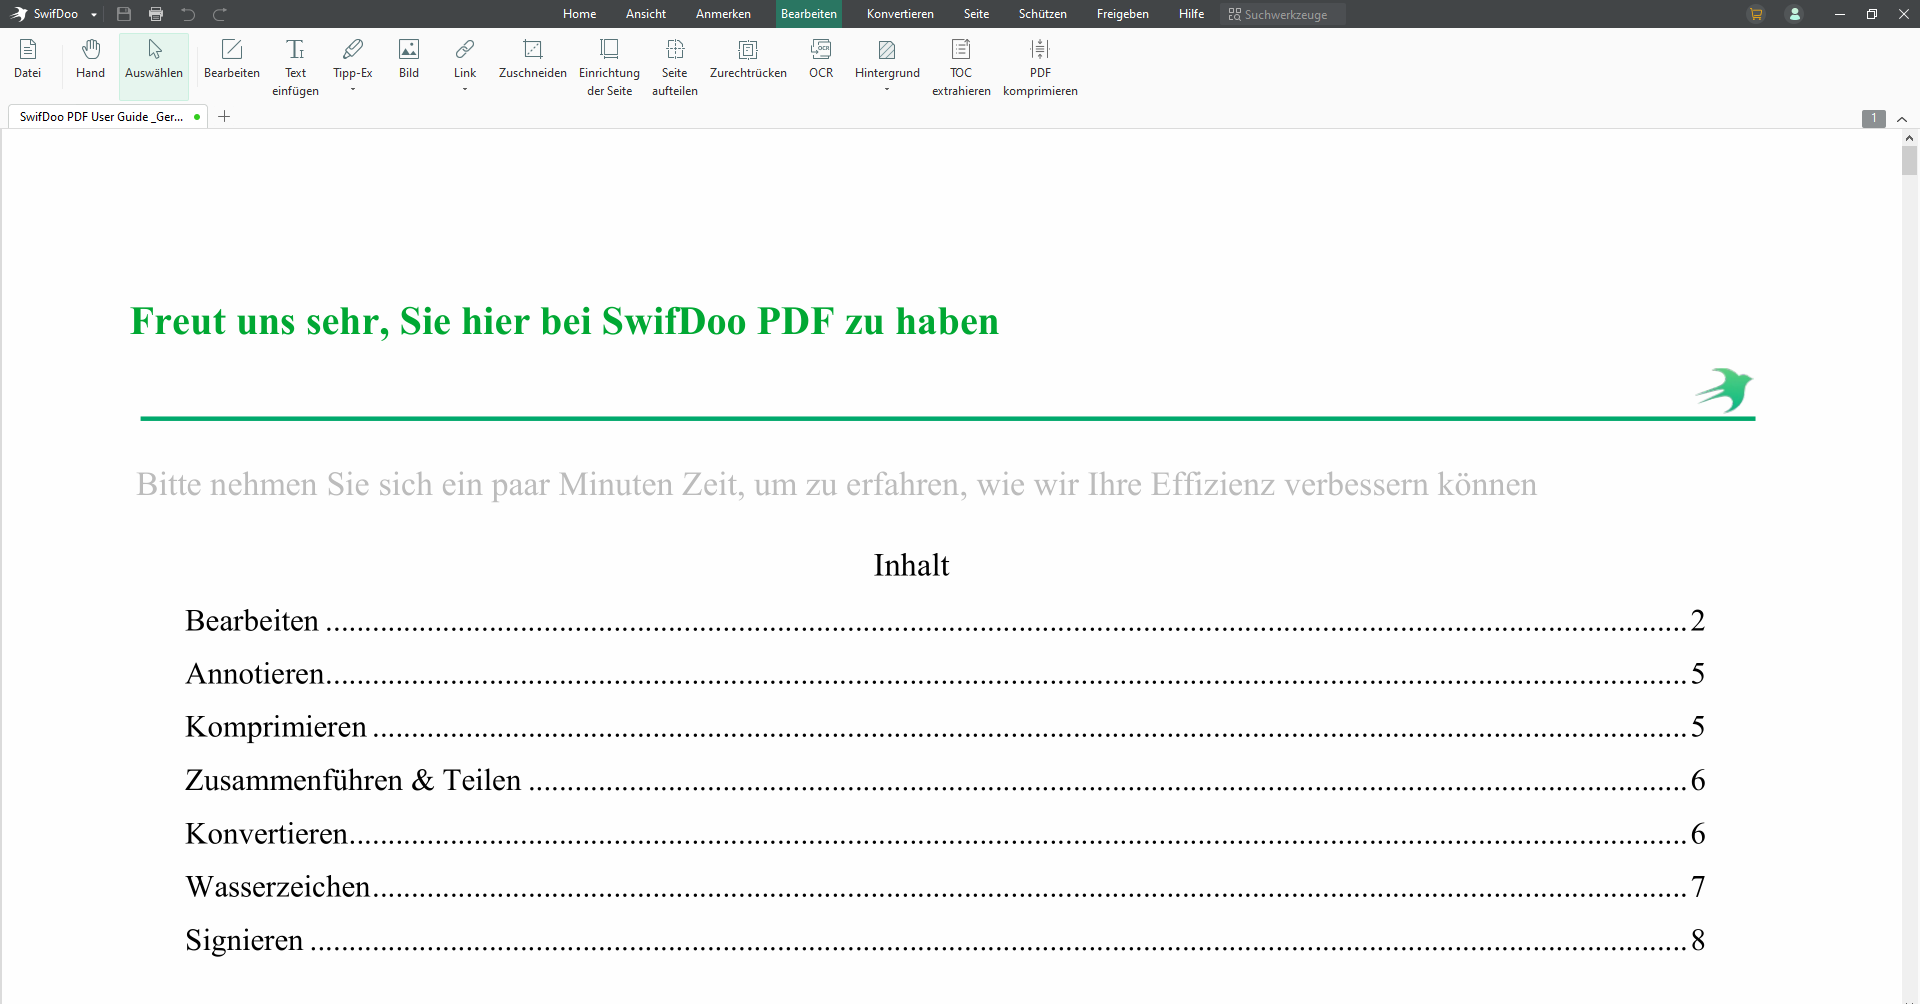 swifDoo PDF